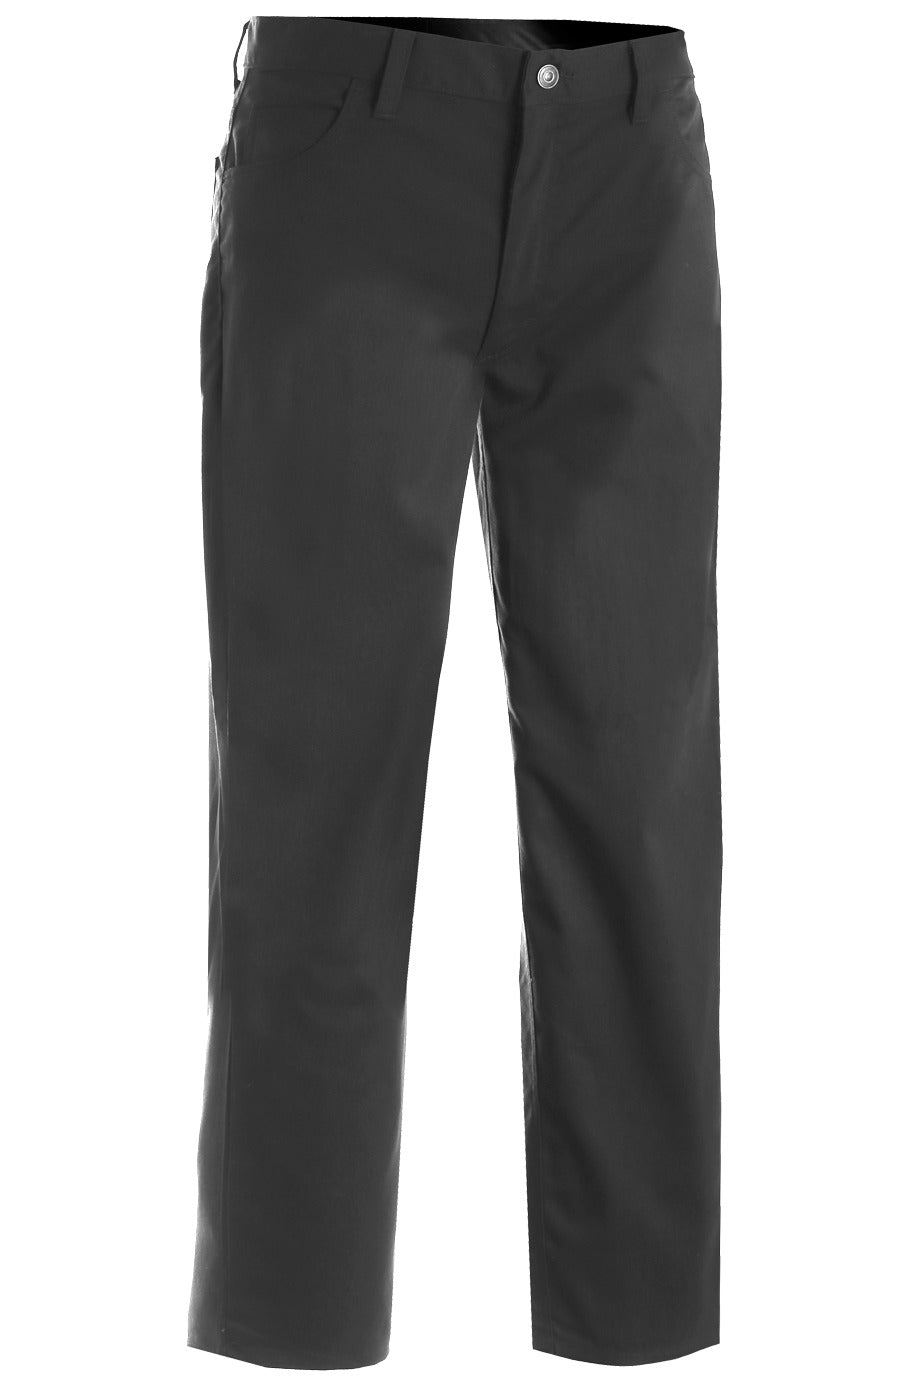 Edwards Men's Steel Grey Rugged Comfort Flat Front Pant